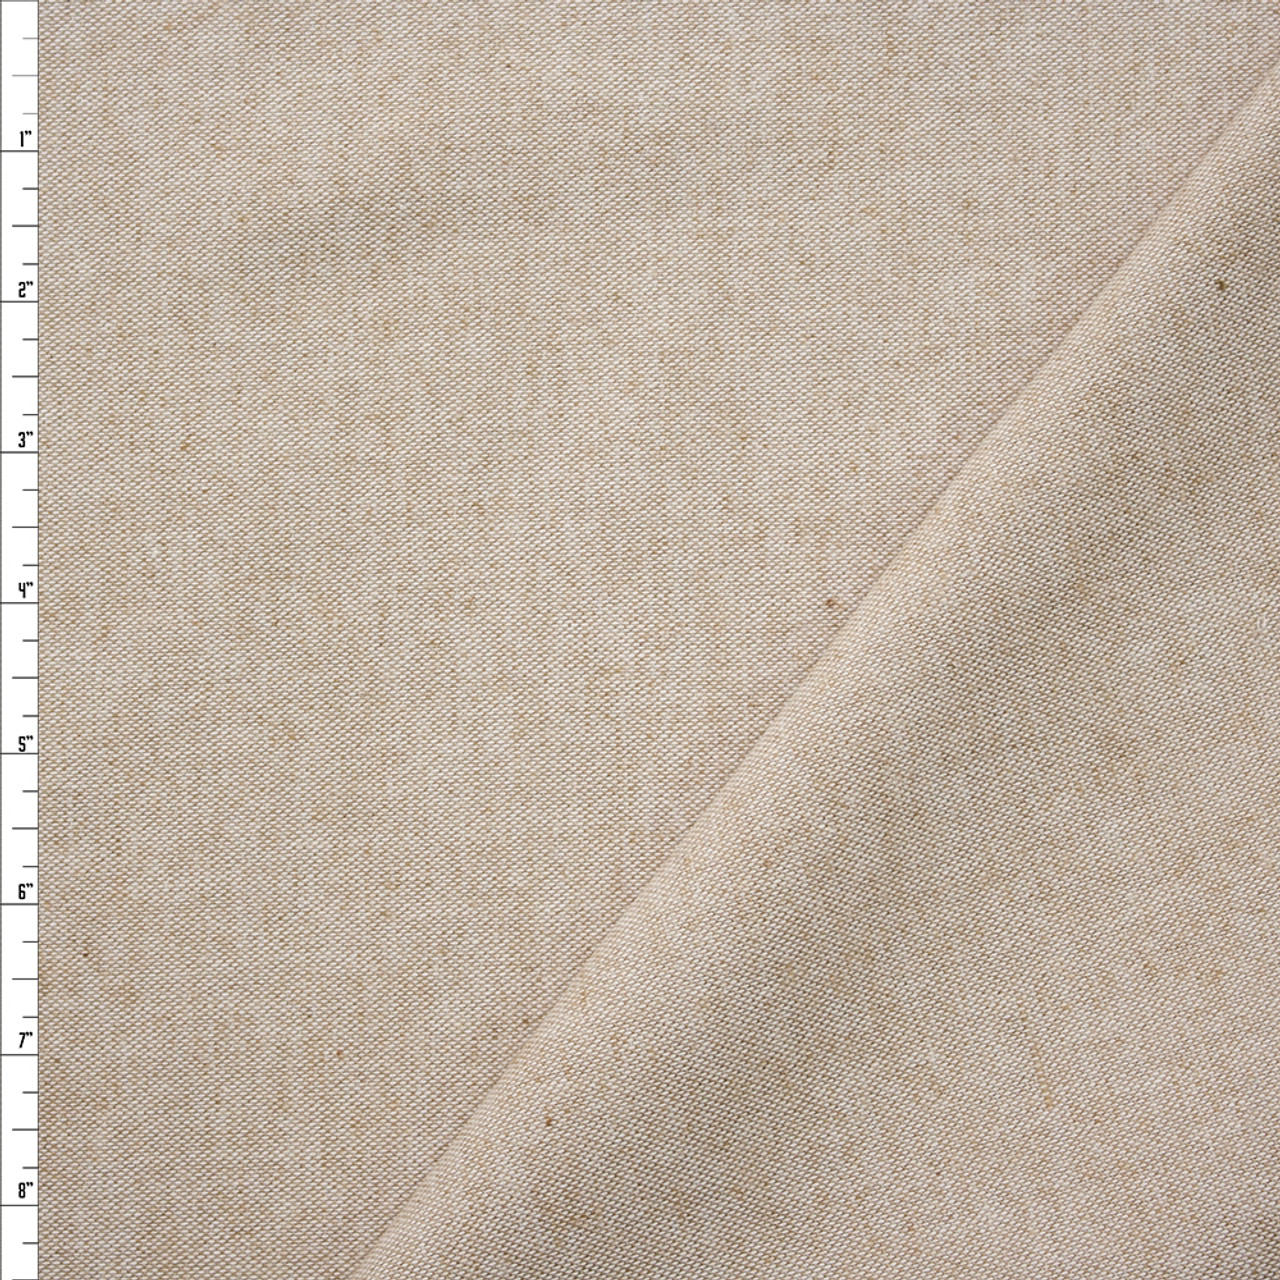 Cali Fabrics Oatmeal Washed Cotton/Linen Blend Duck Canvas Fabric